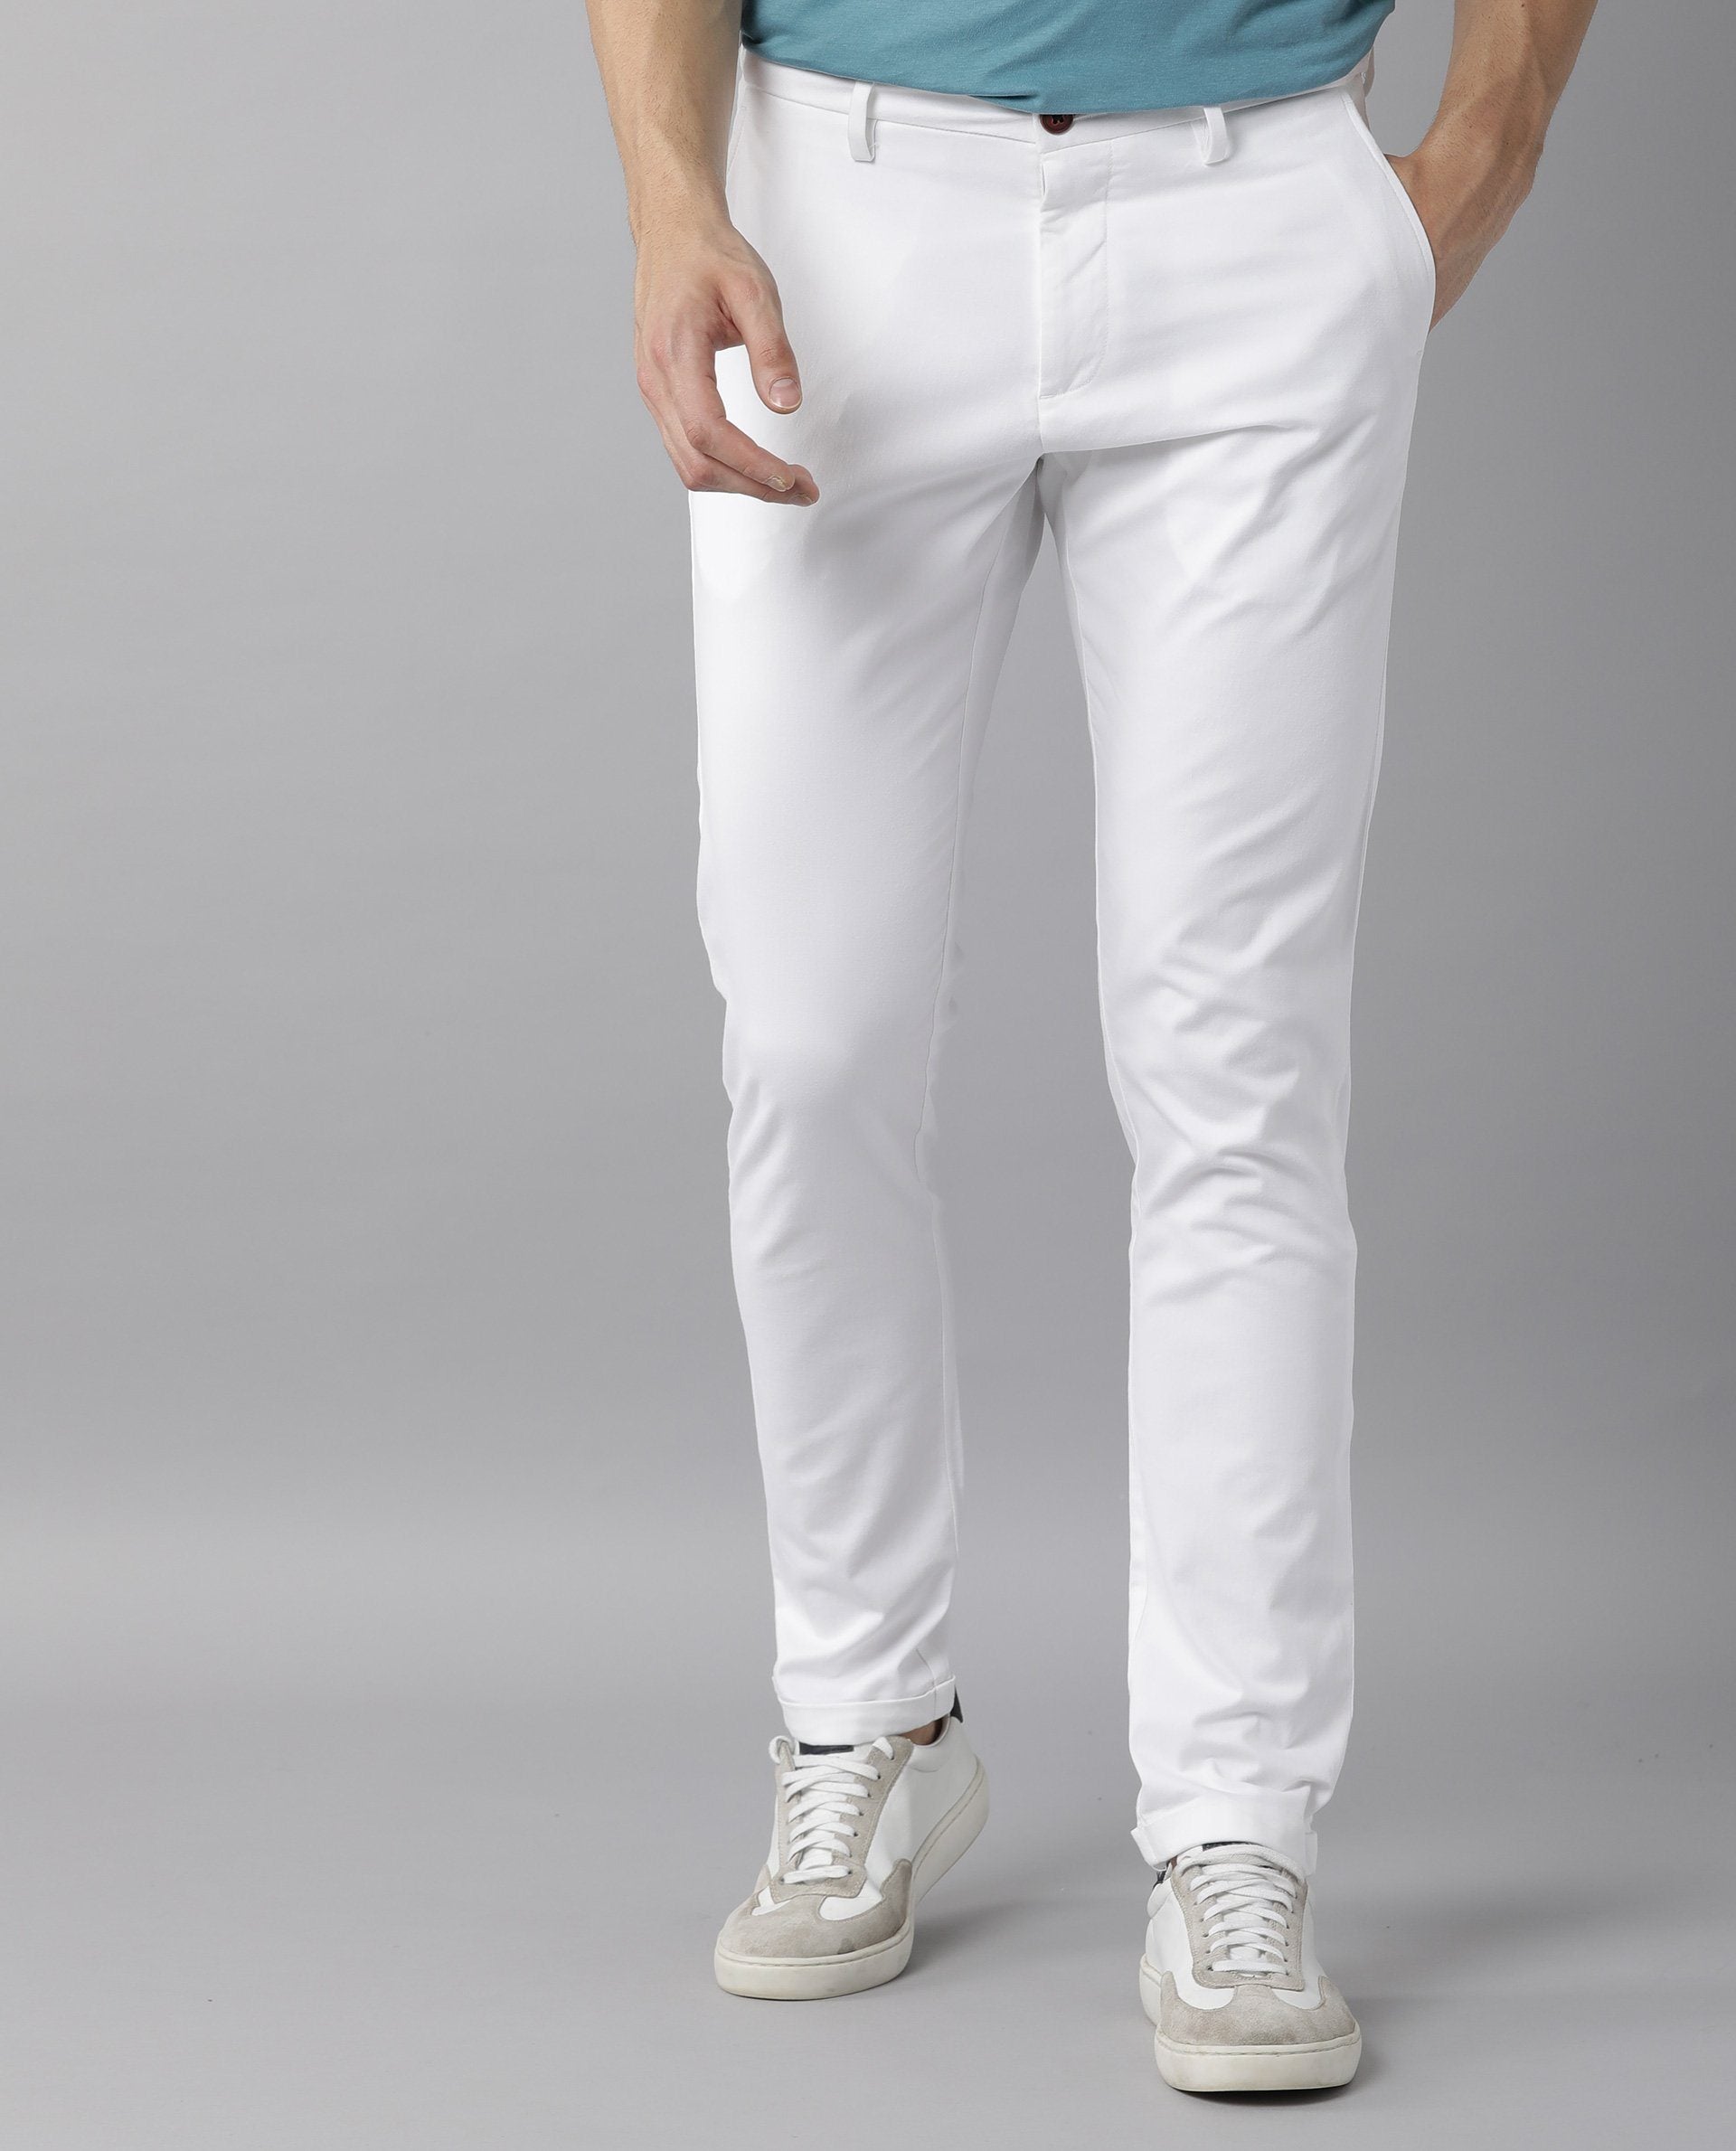 Buy Women White Stripe Formal Slim Fit Trousers Online  740038  Van Heusen